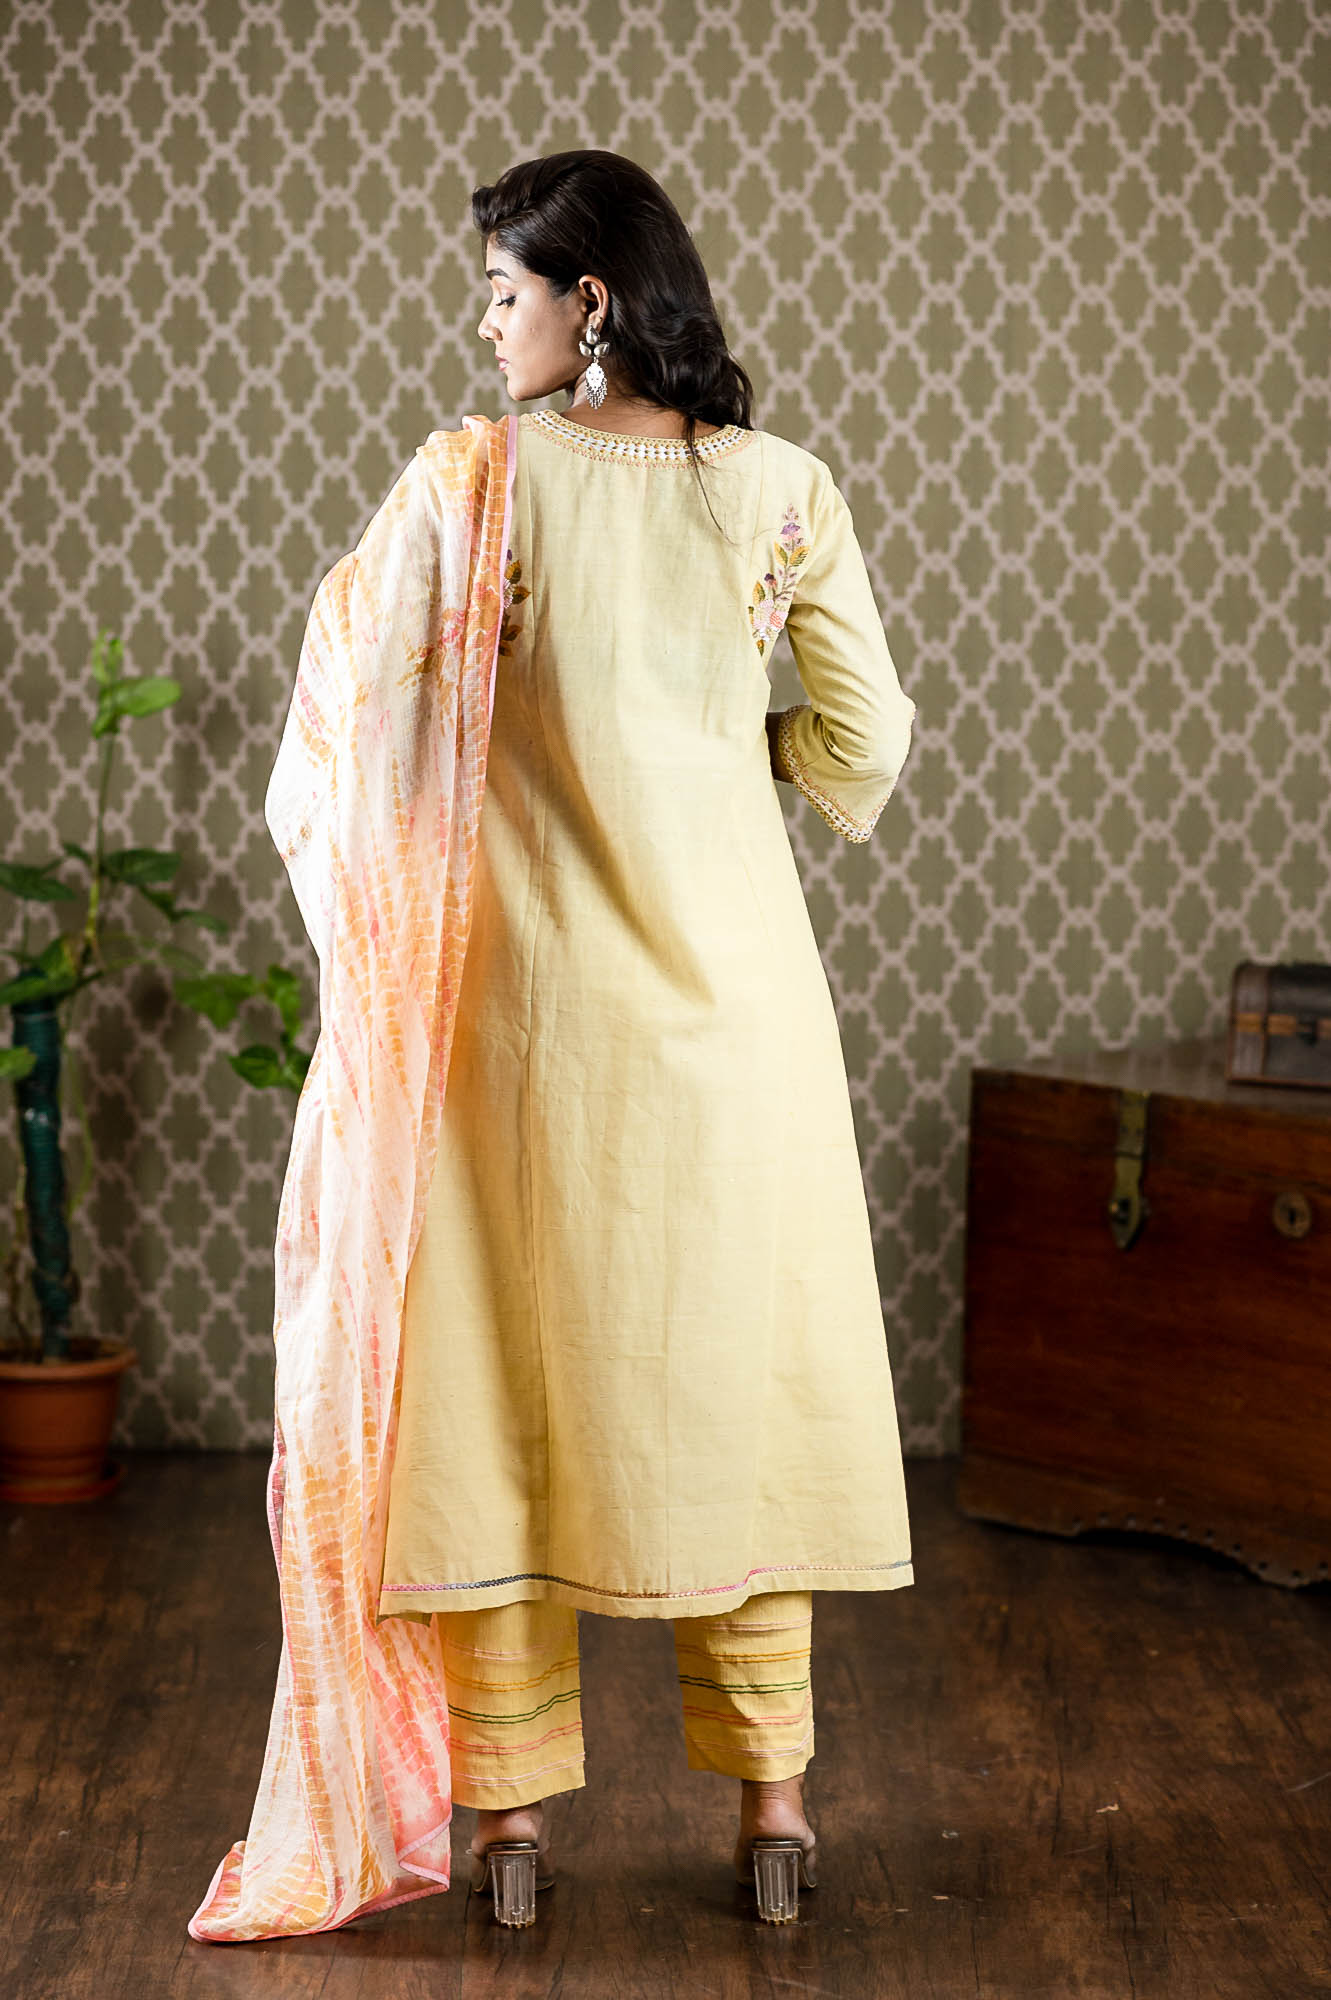 Unisex Authentic Khadi Organic Cotton Pants: Comfortable Indian Bottoms-One  Size | eBay